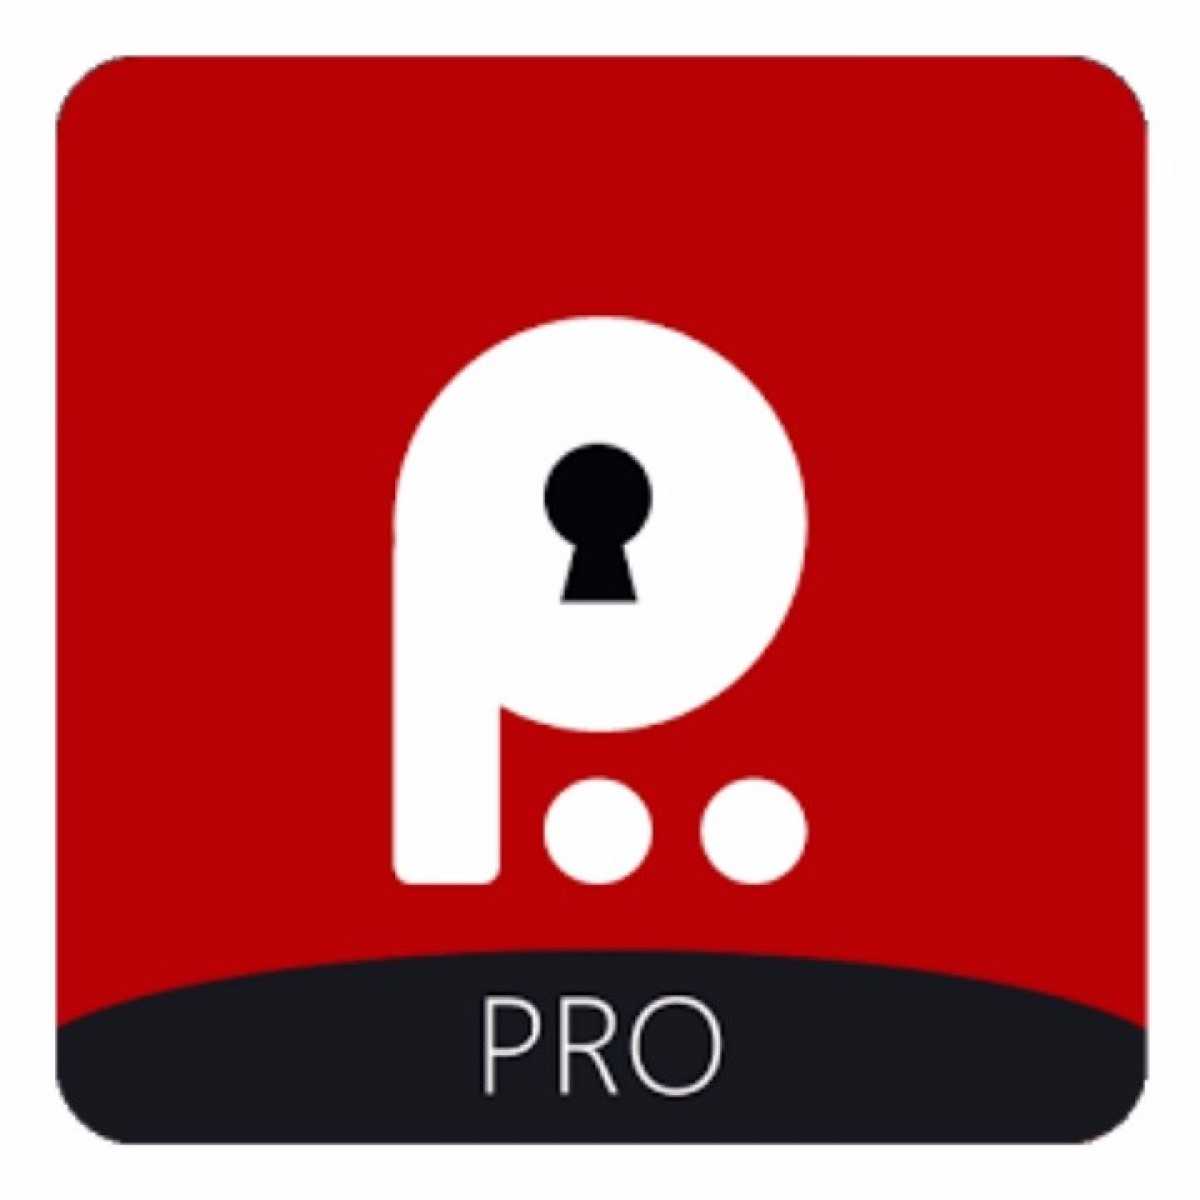 Personal Vault Pro v5.0-full (Paid) Apk